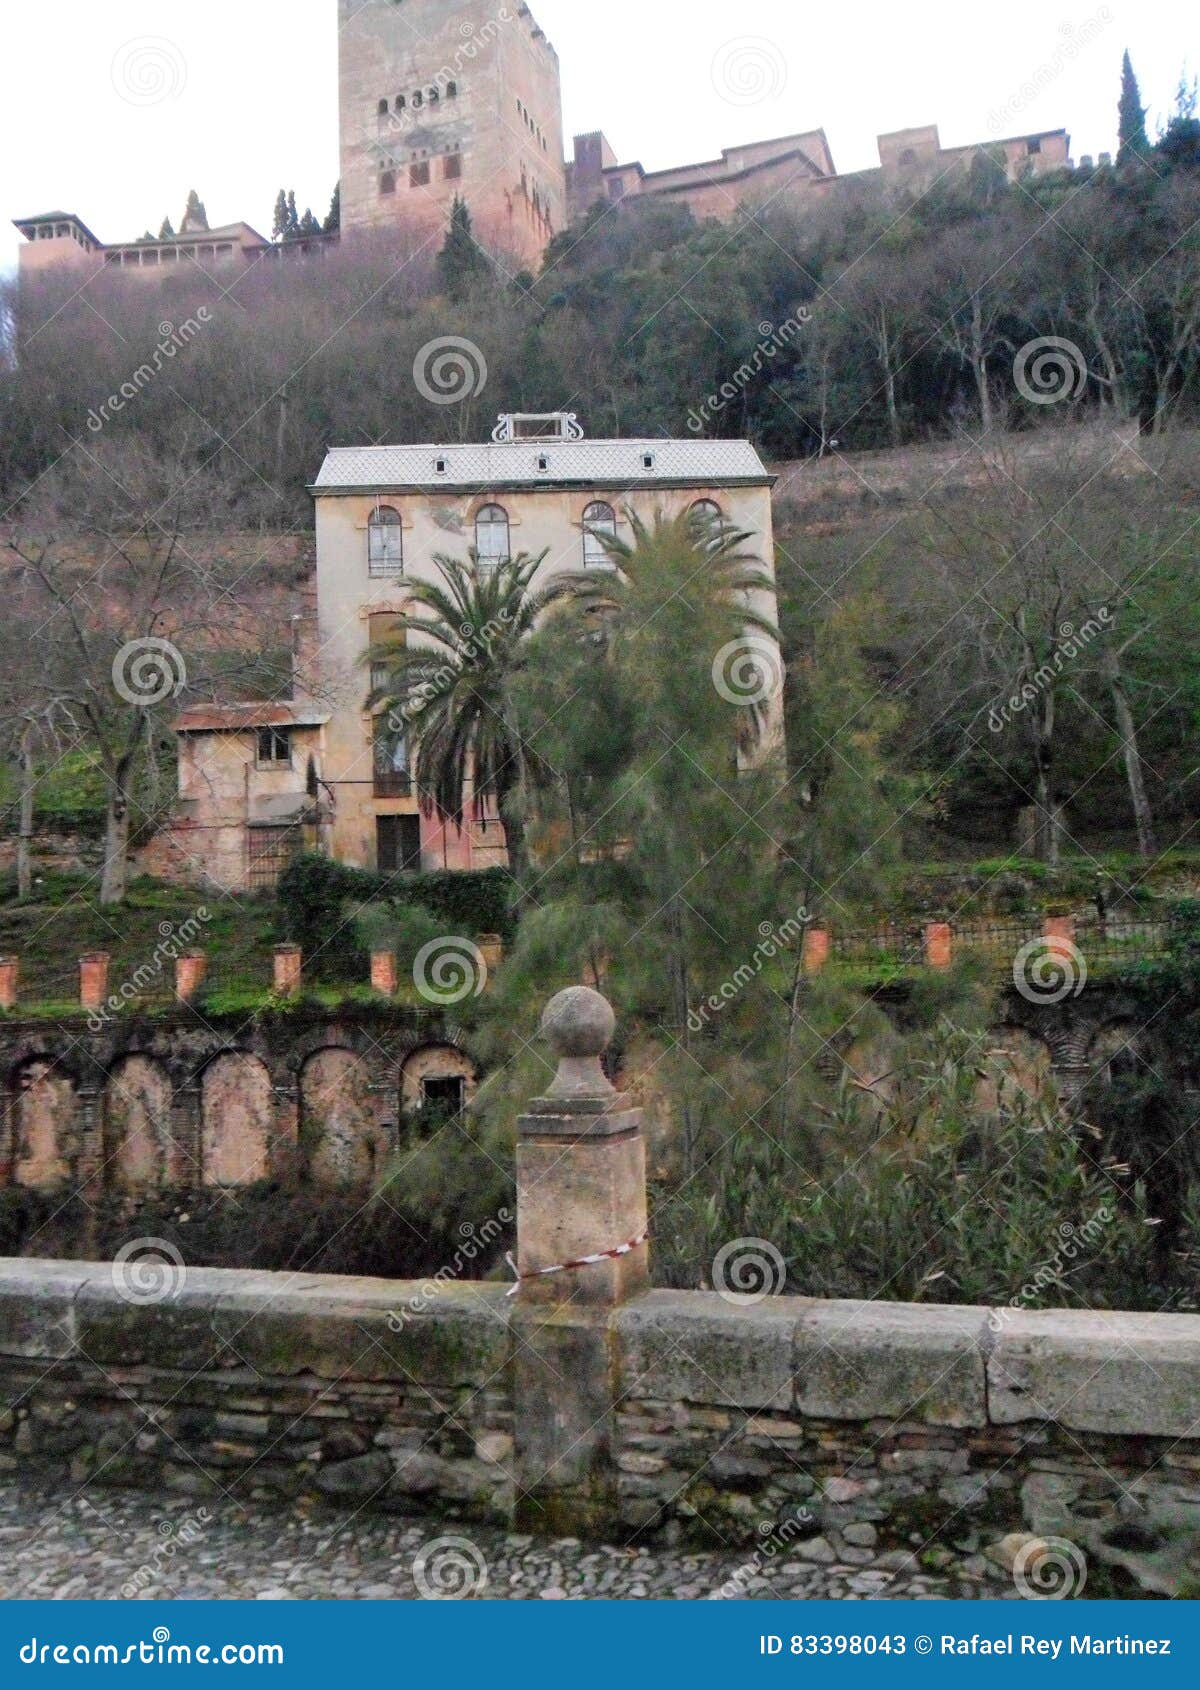 the alhambra from of paseo de los tristes- albayzin-granada-spain